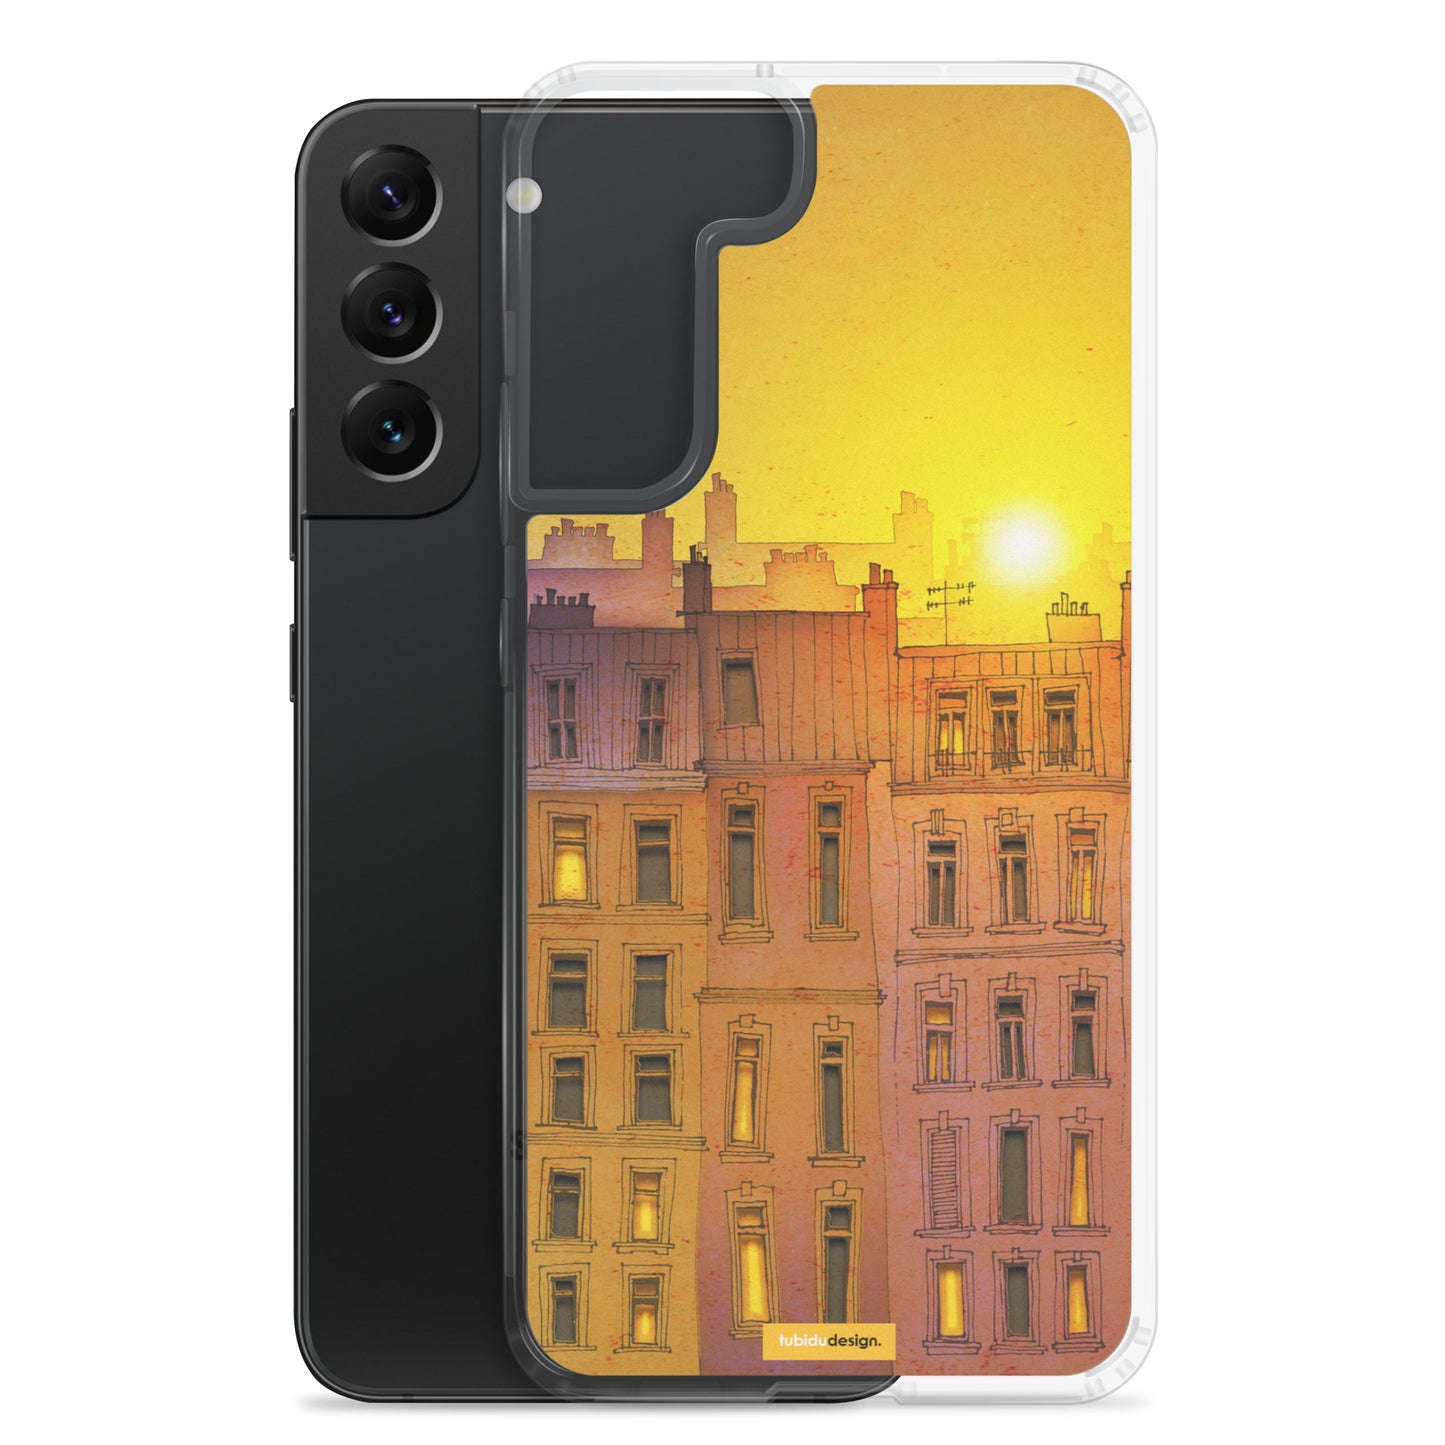 Sunrise - Illustrated Samsung Phone Case